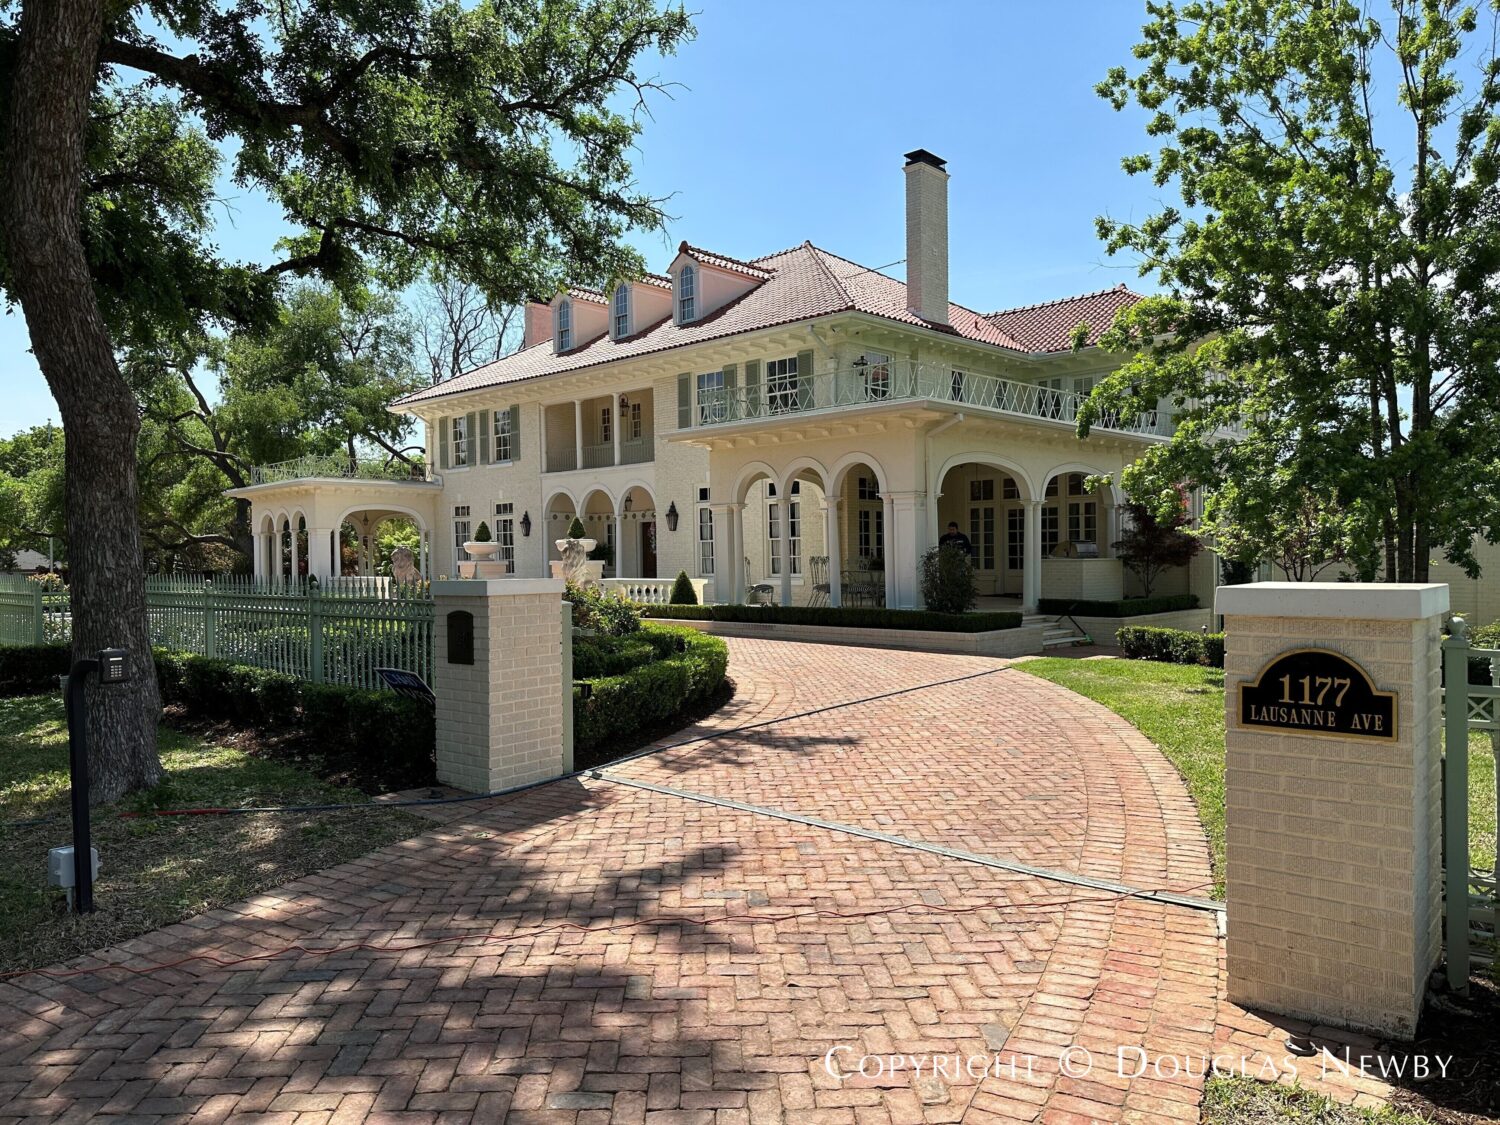 Italian Renaissance style home at 1177 Lausanne Avenue in Kessler Park, Dallas, Texas